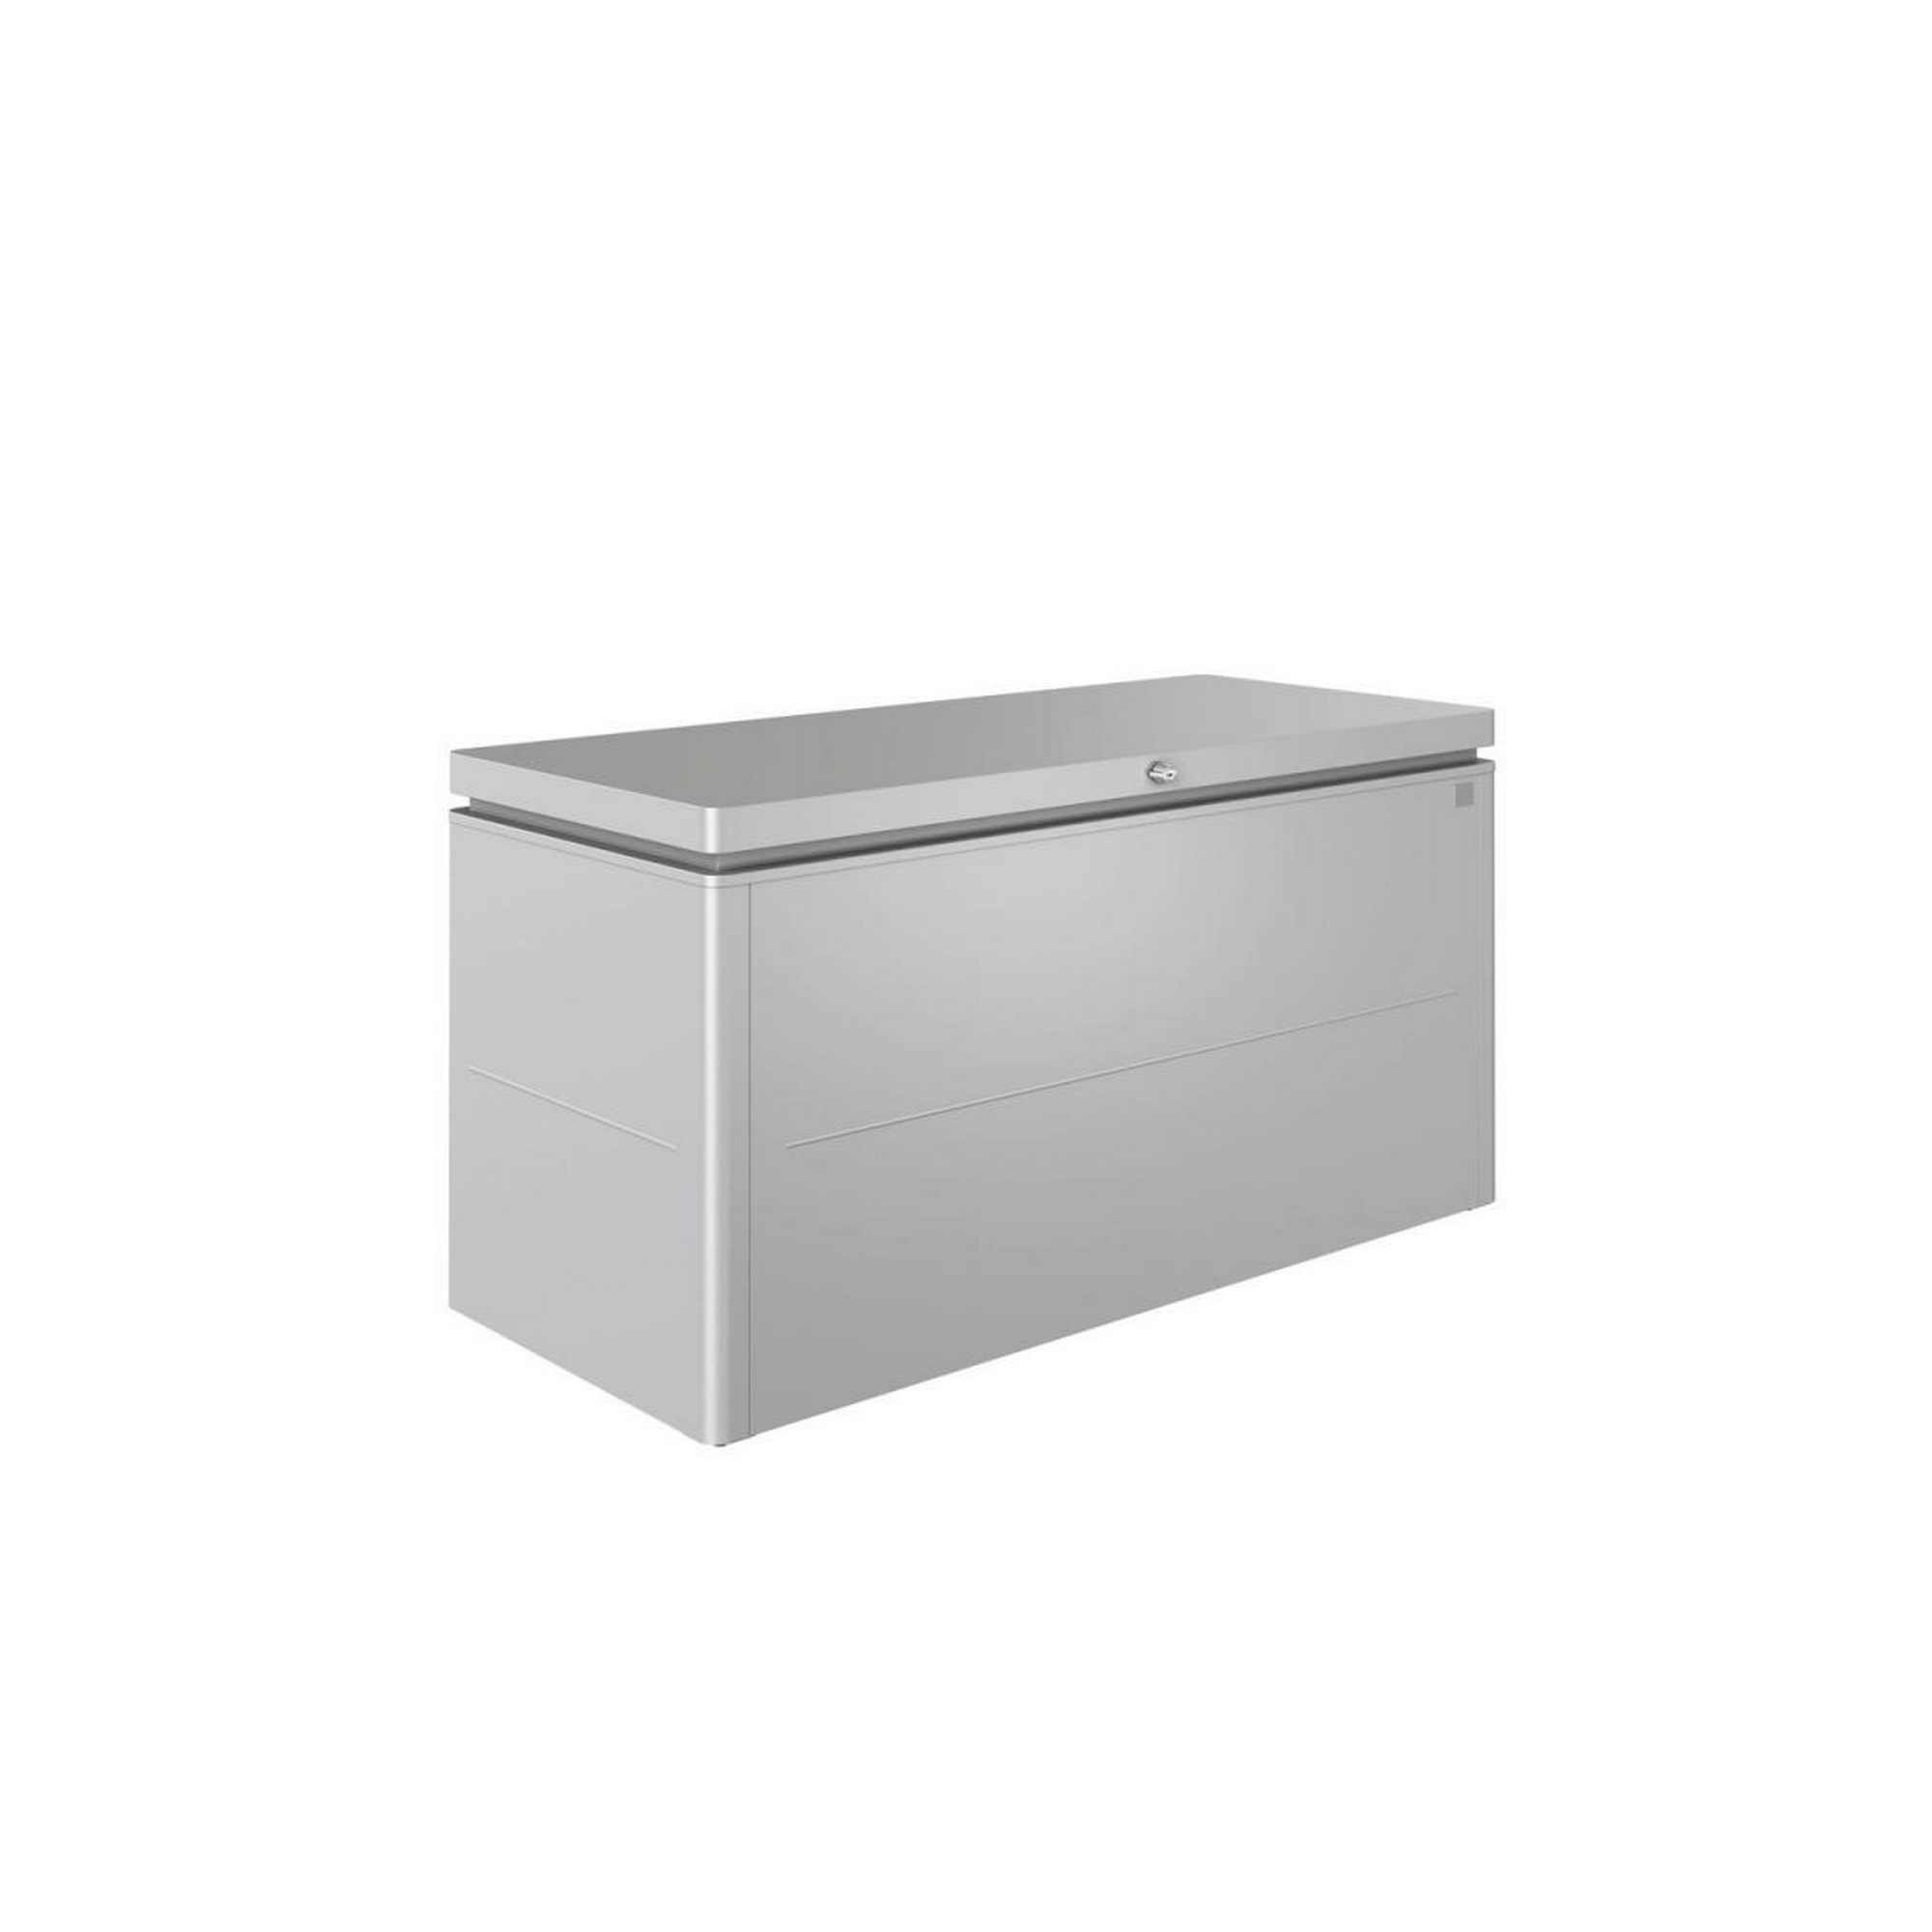 Aufbewahrungsbox 'LoungeBox 160' silber metallic 160 x 70 x 83,5 cm + product picture